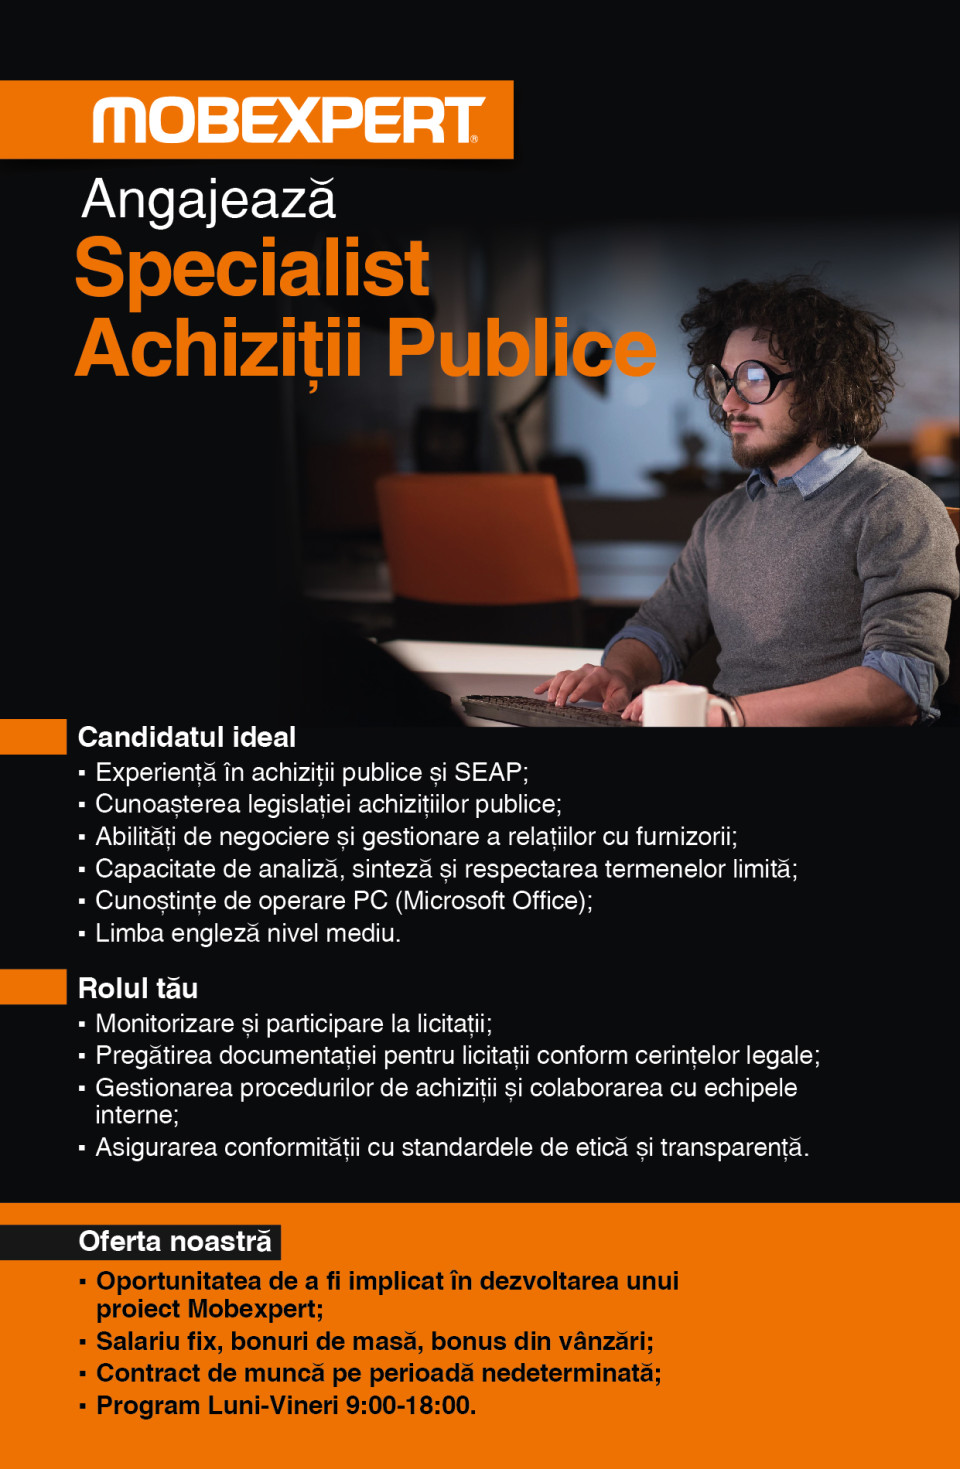 Specialist Achizitii Publice